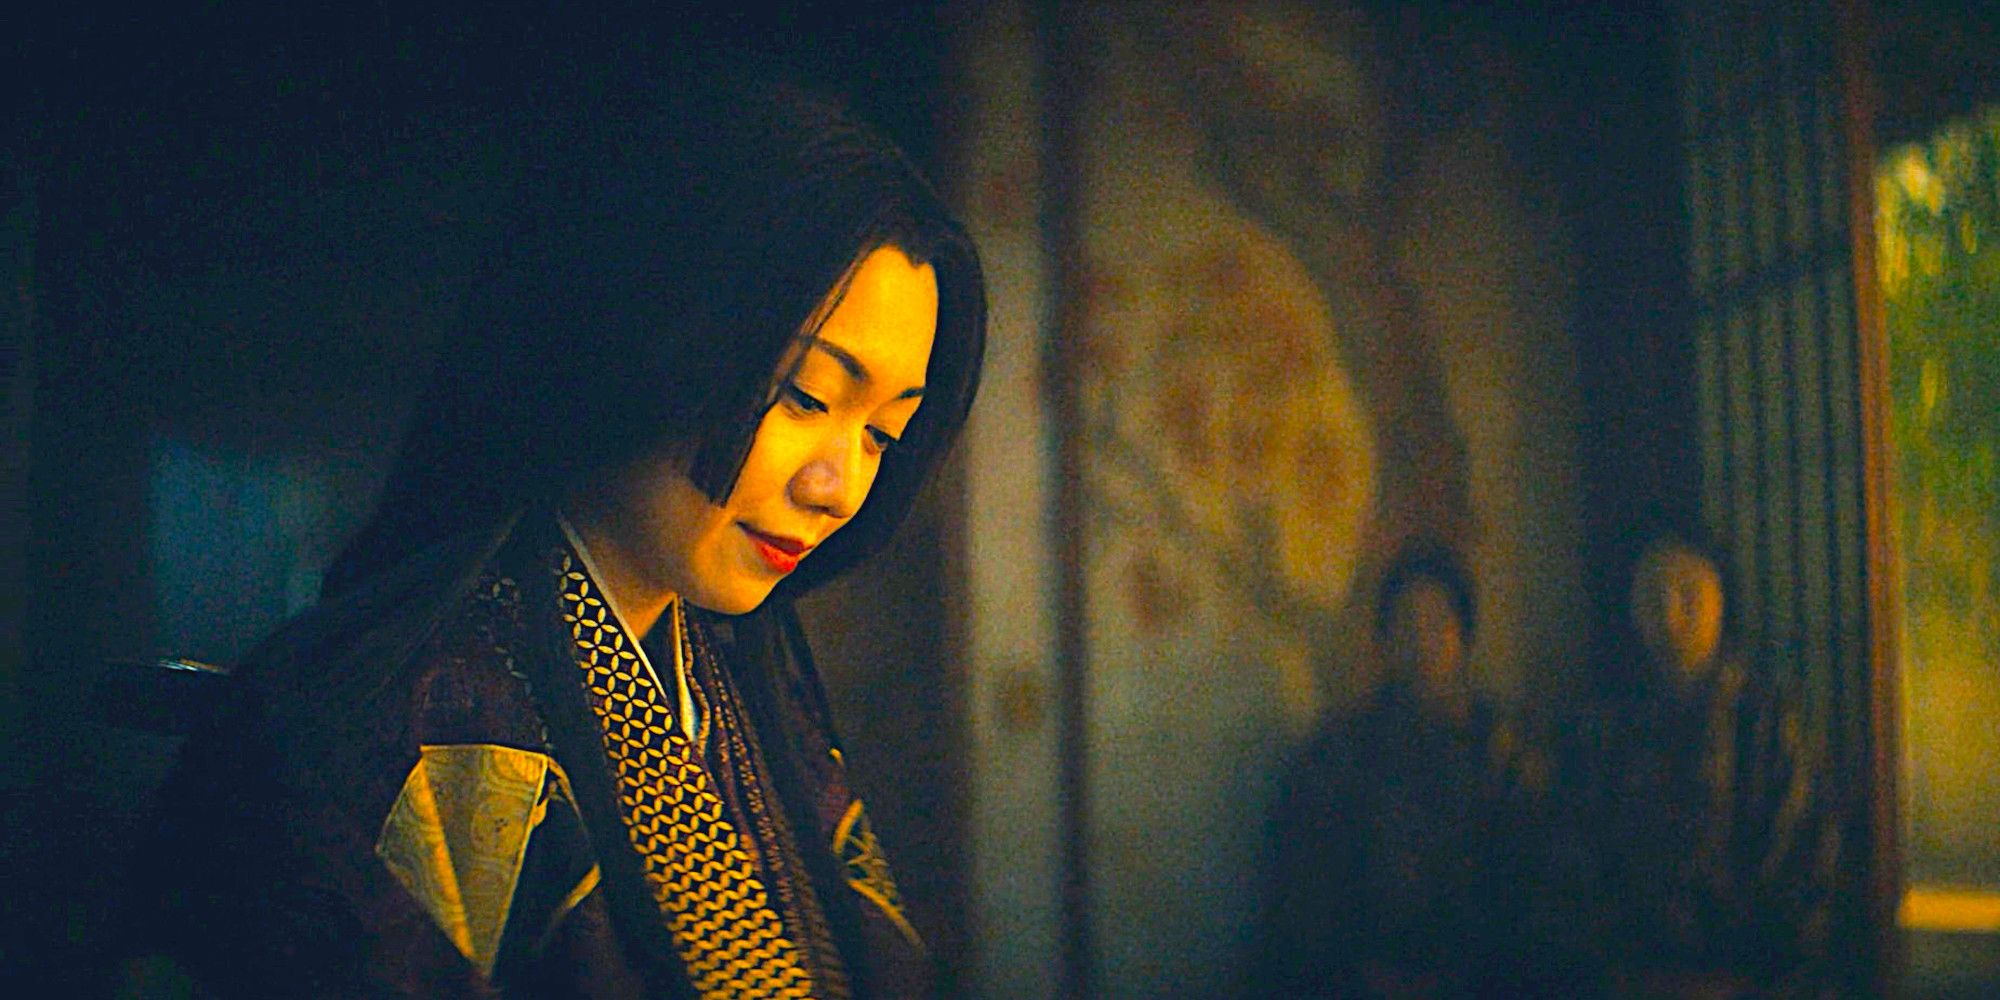 Ochiba looks down with a serene expression in a scene from Shogun season 1